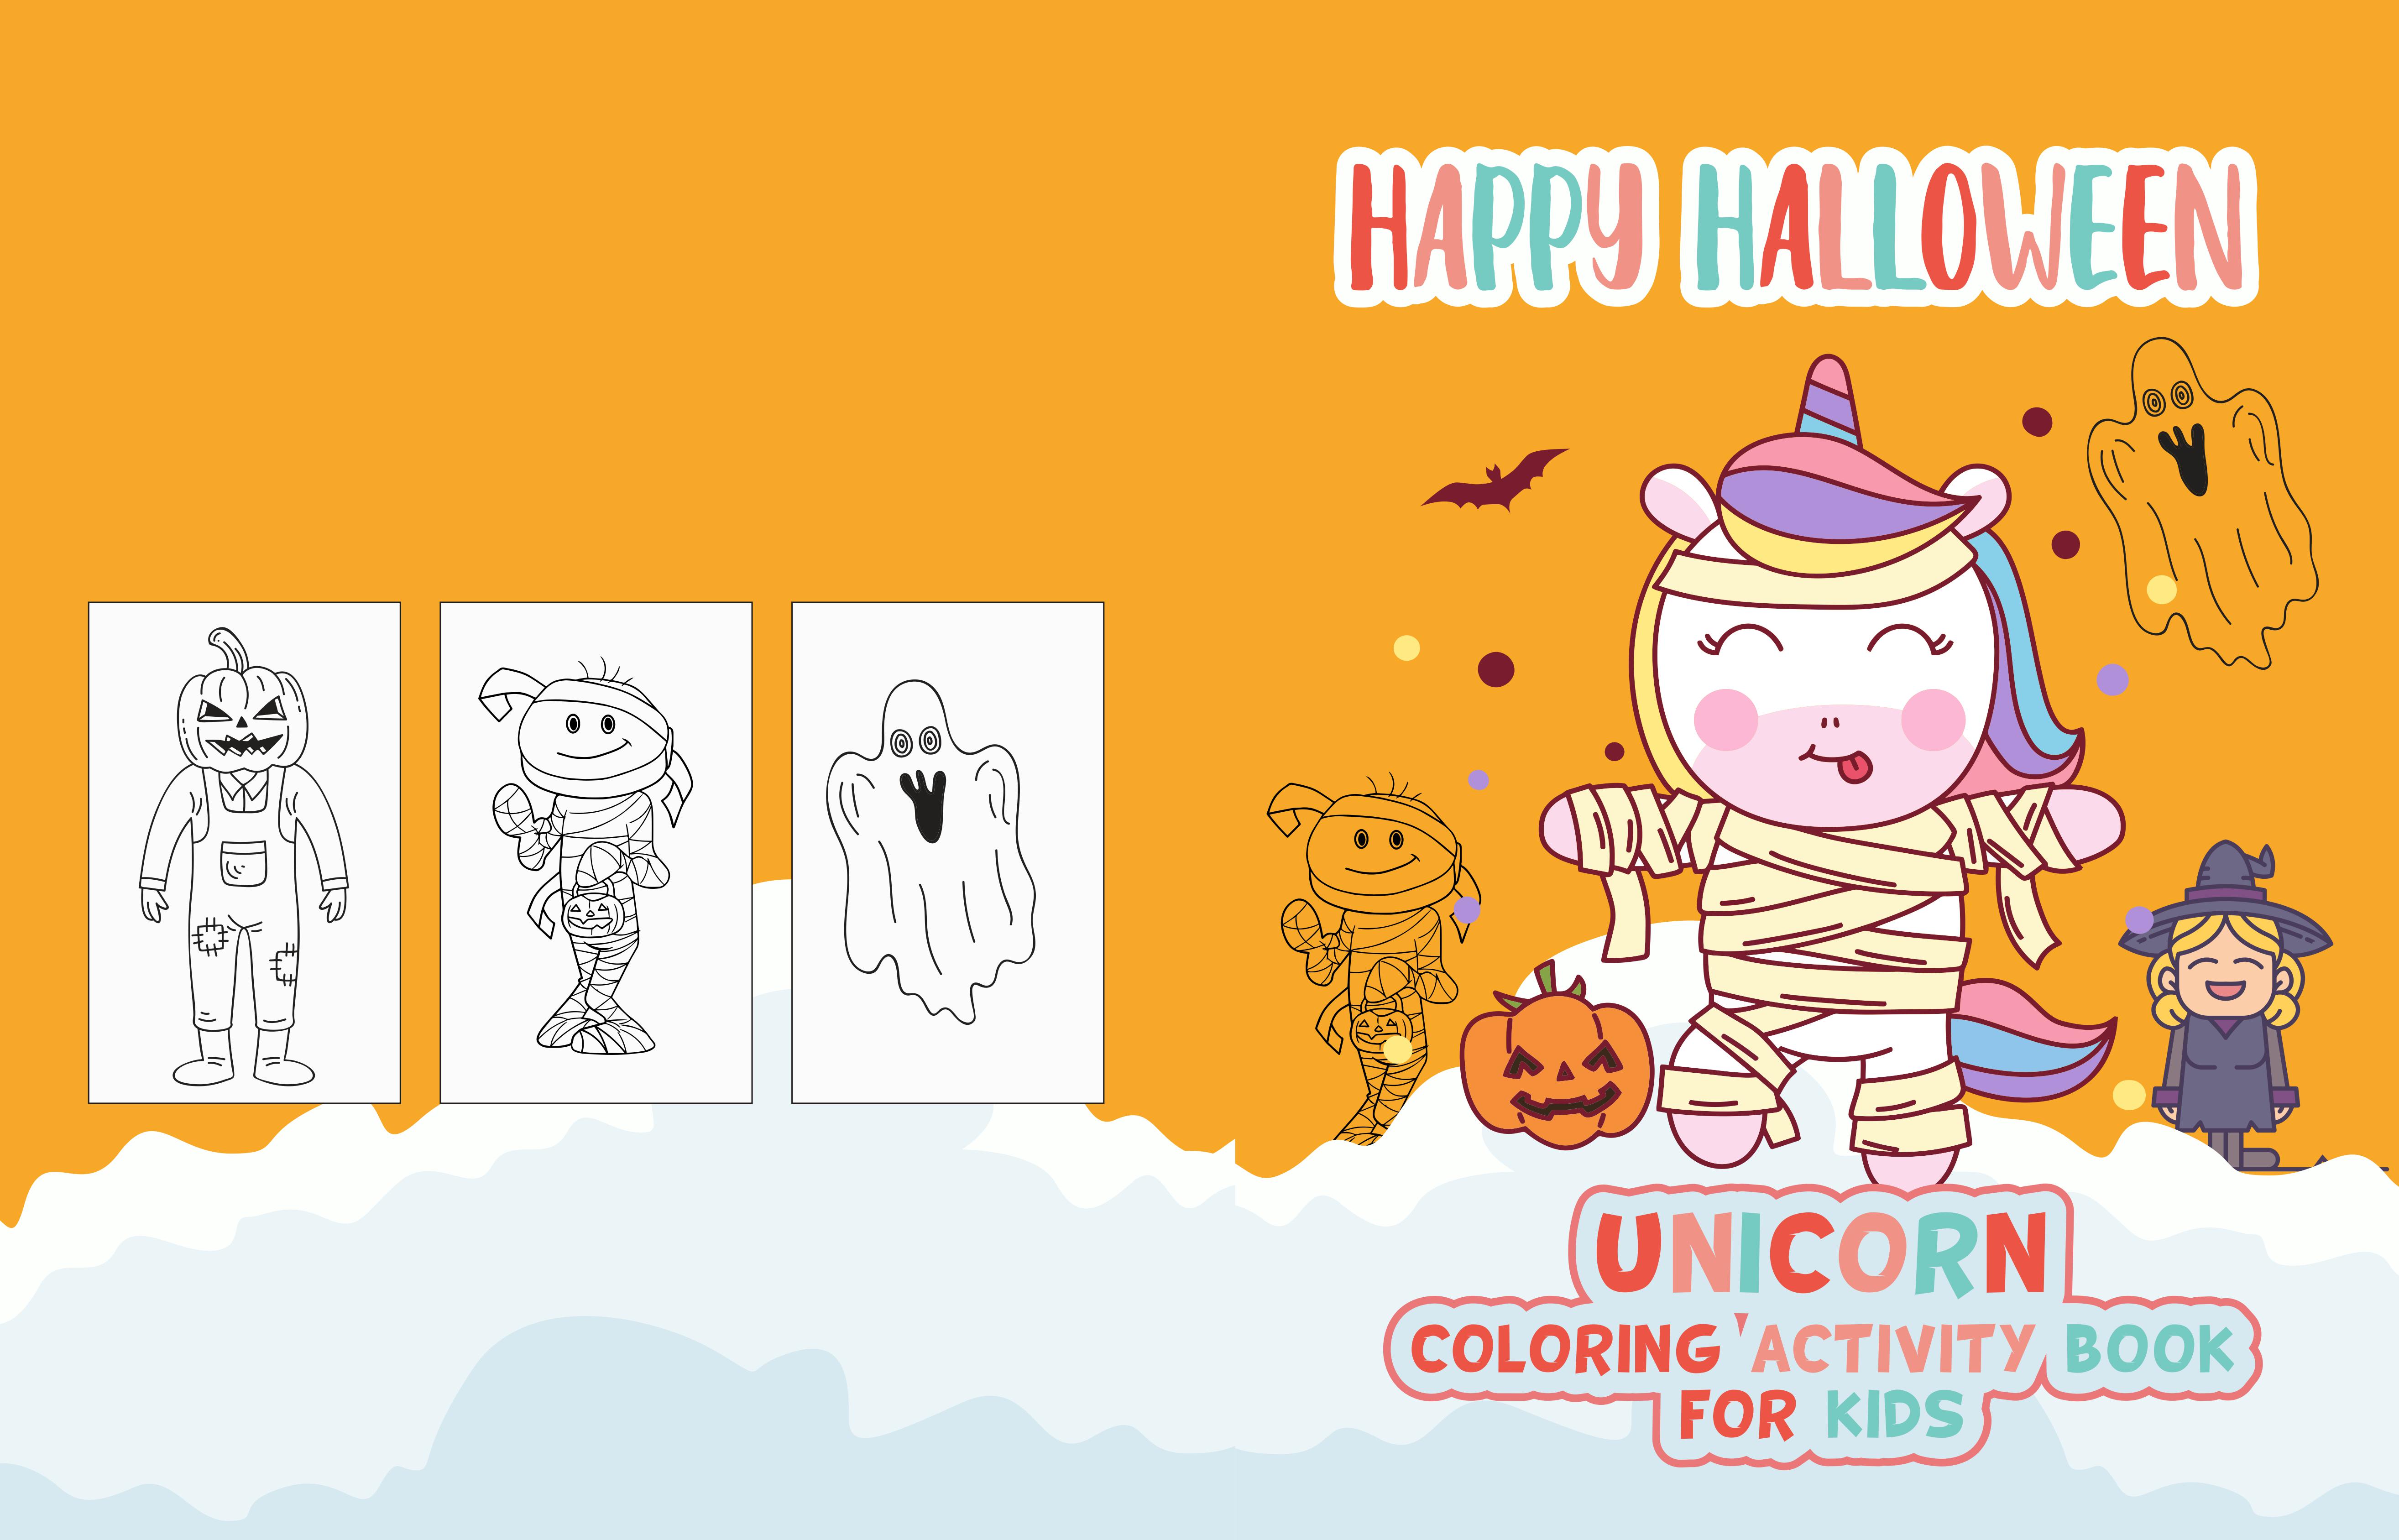 Download Create Children Coloring Book Cover For Amazon Kdp By Aleena Arisha Fiverr